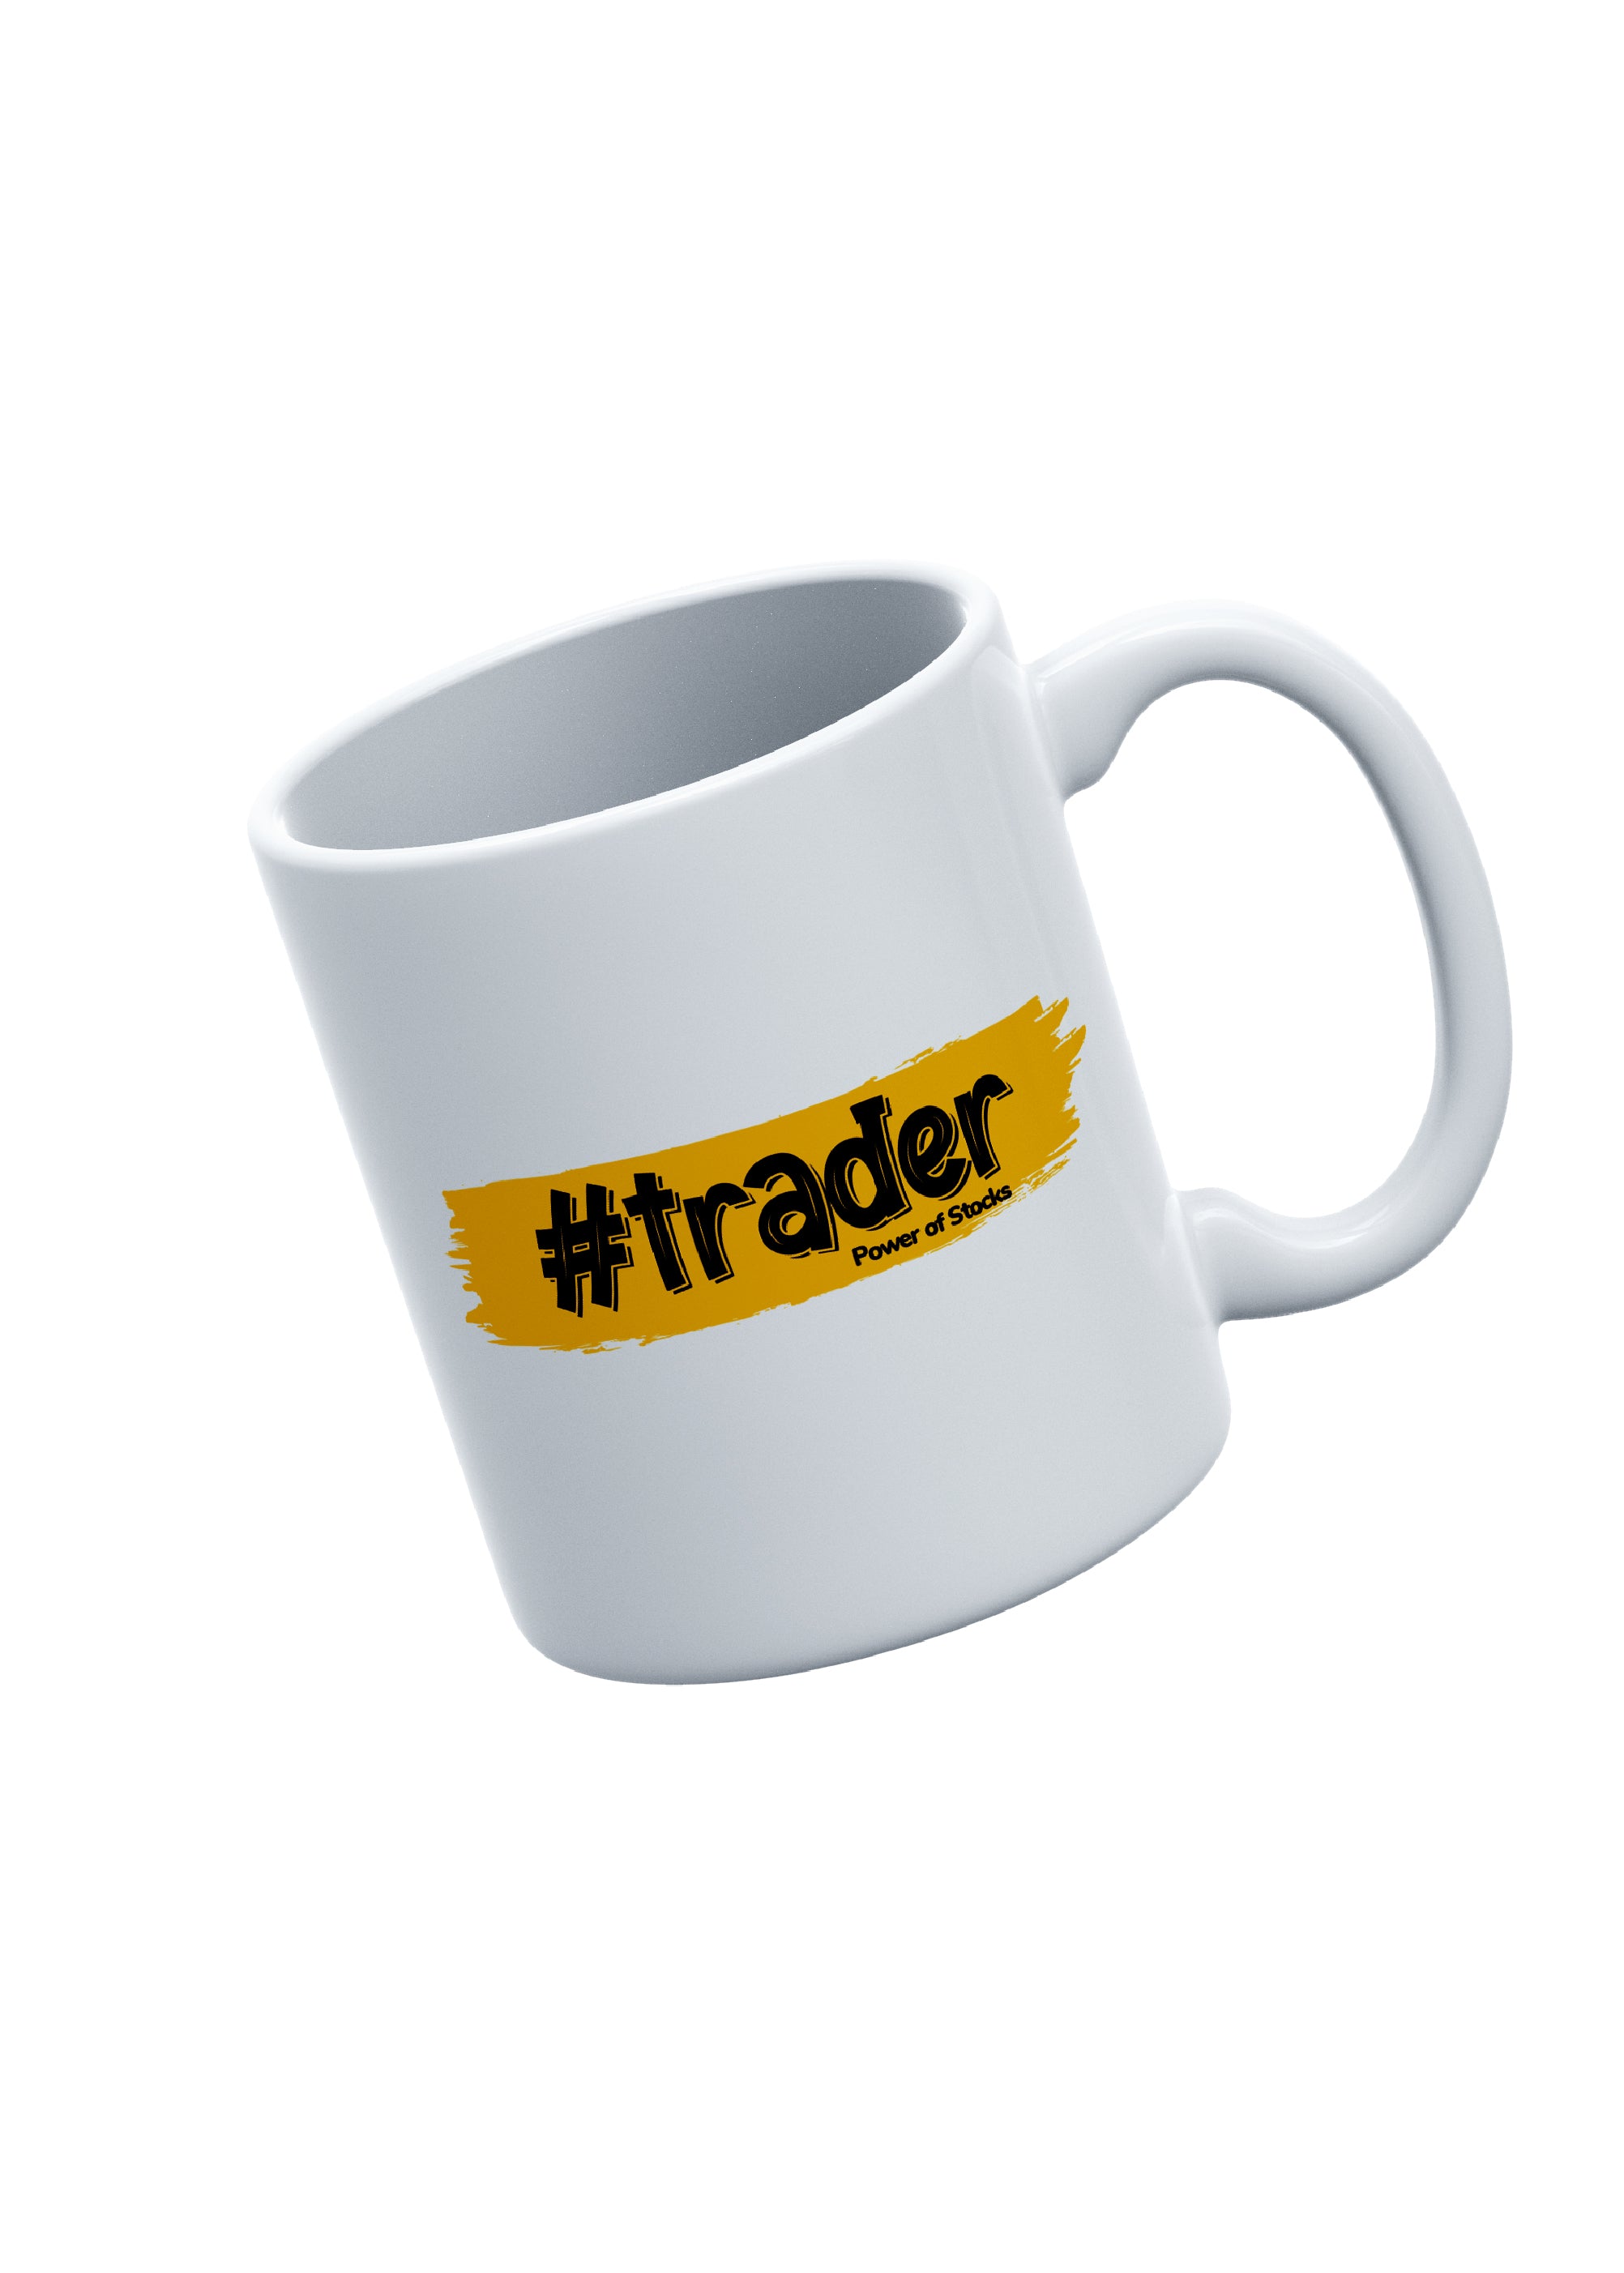 #Trader Coffee Mug